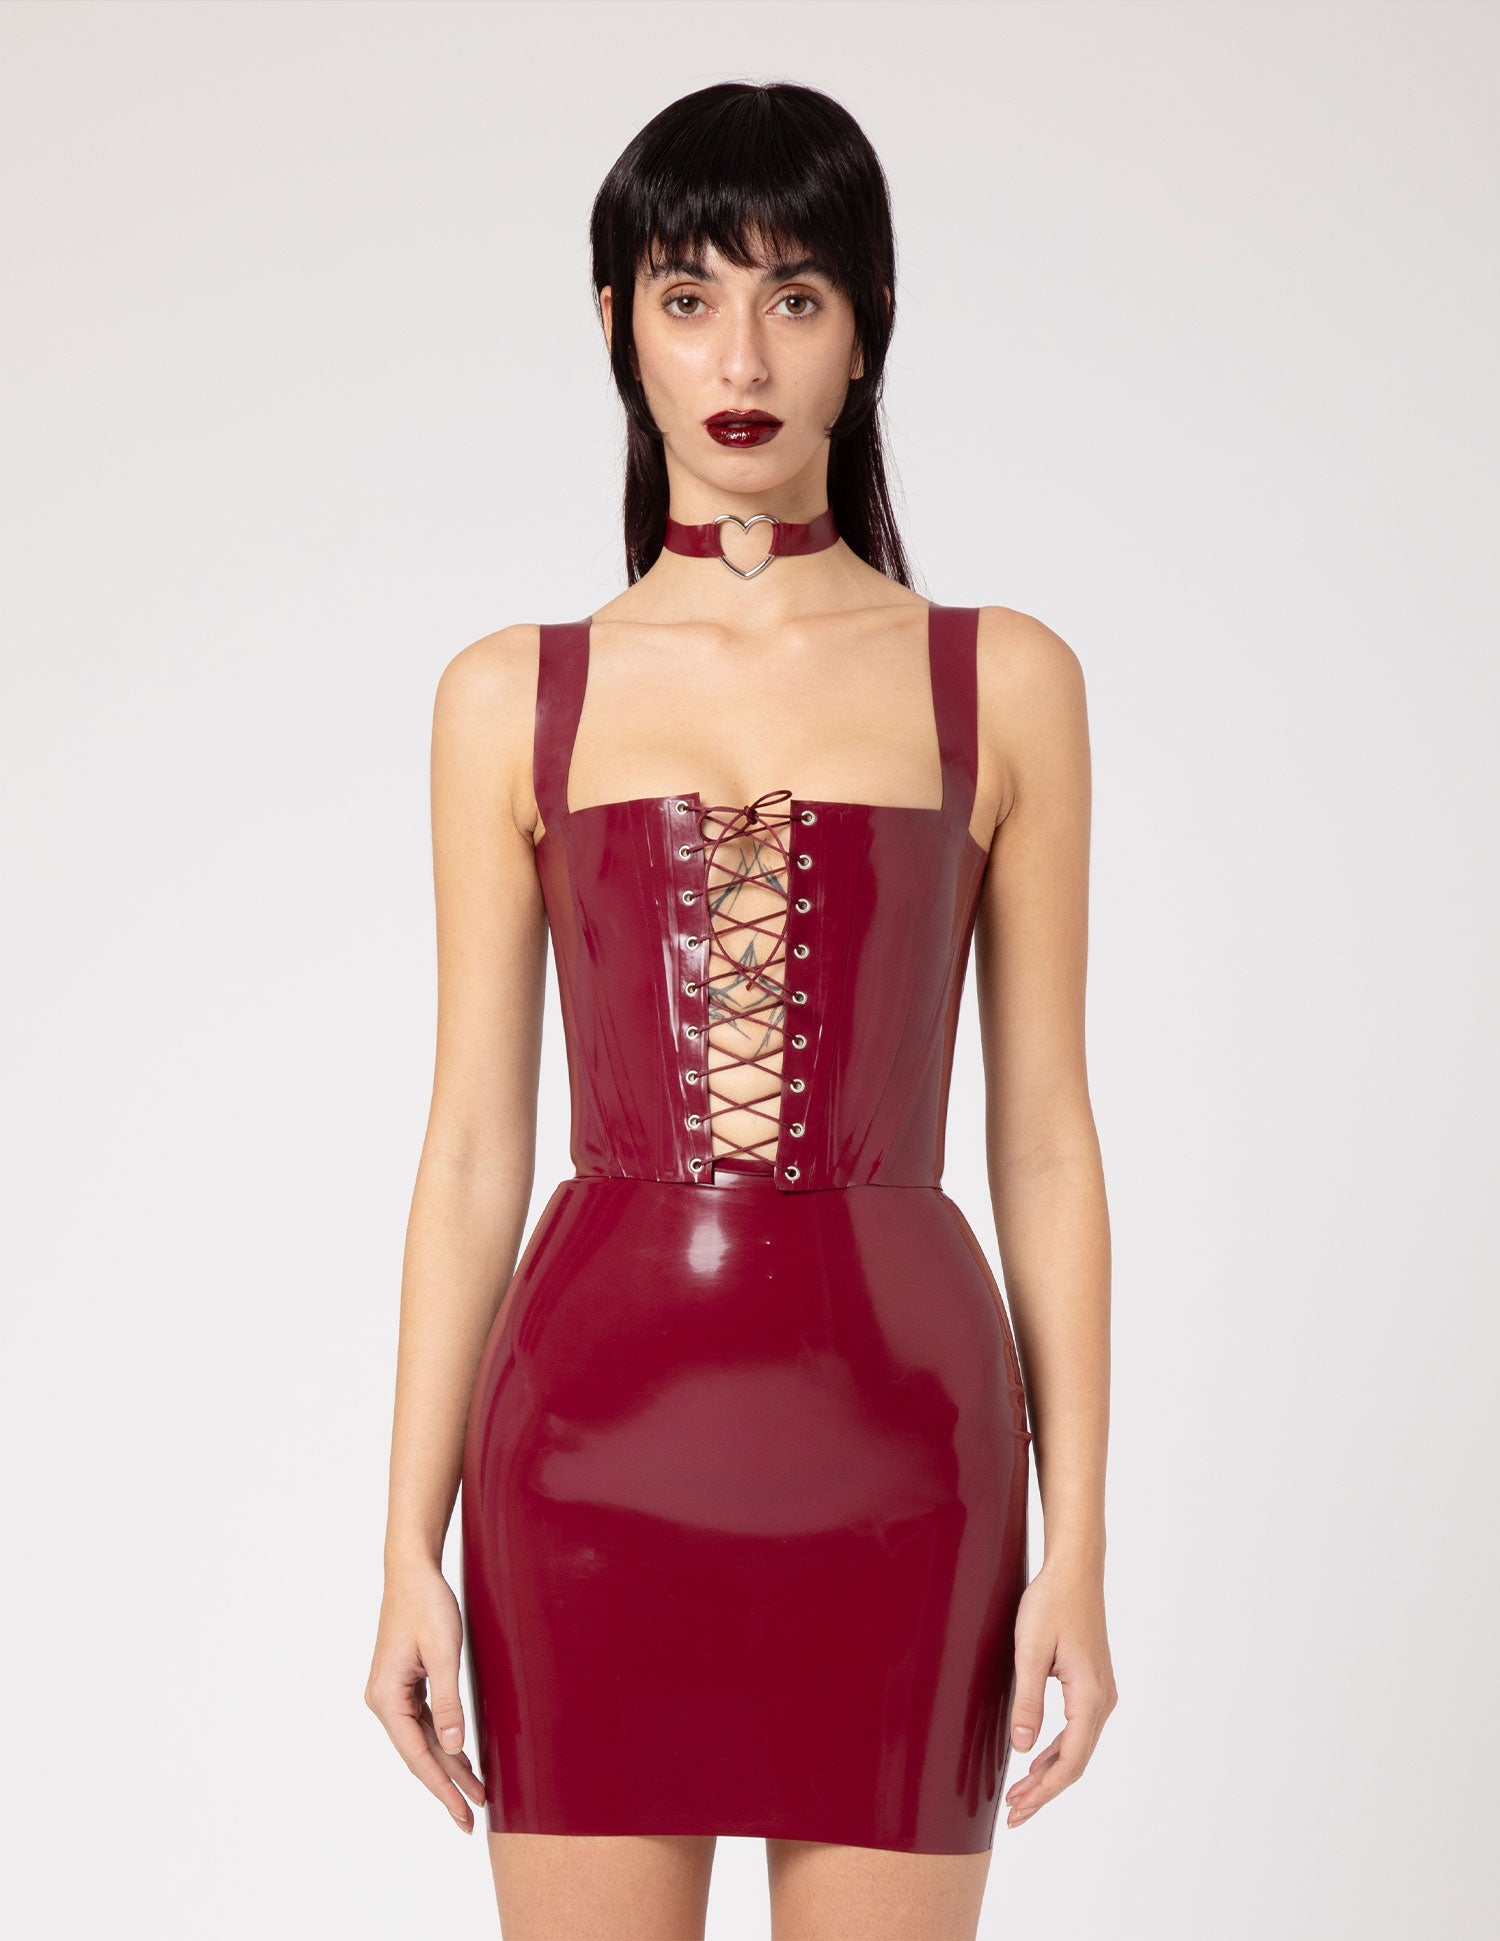 Kim' corset